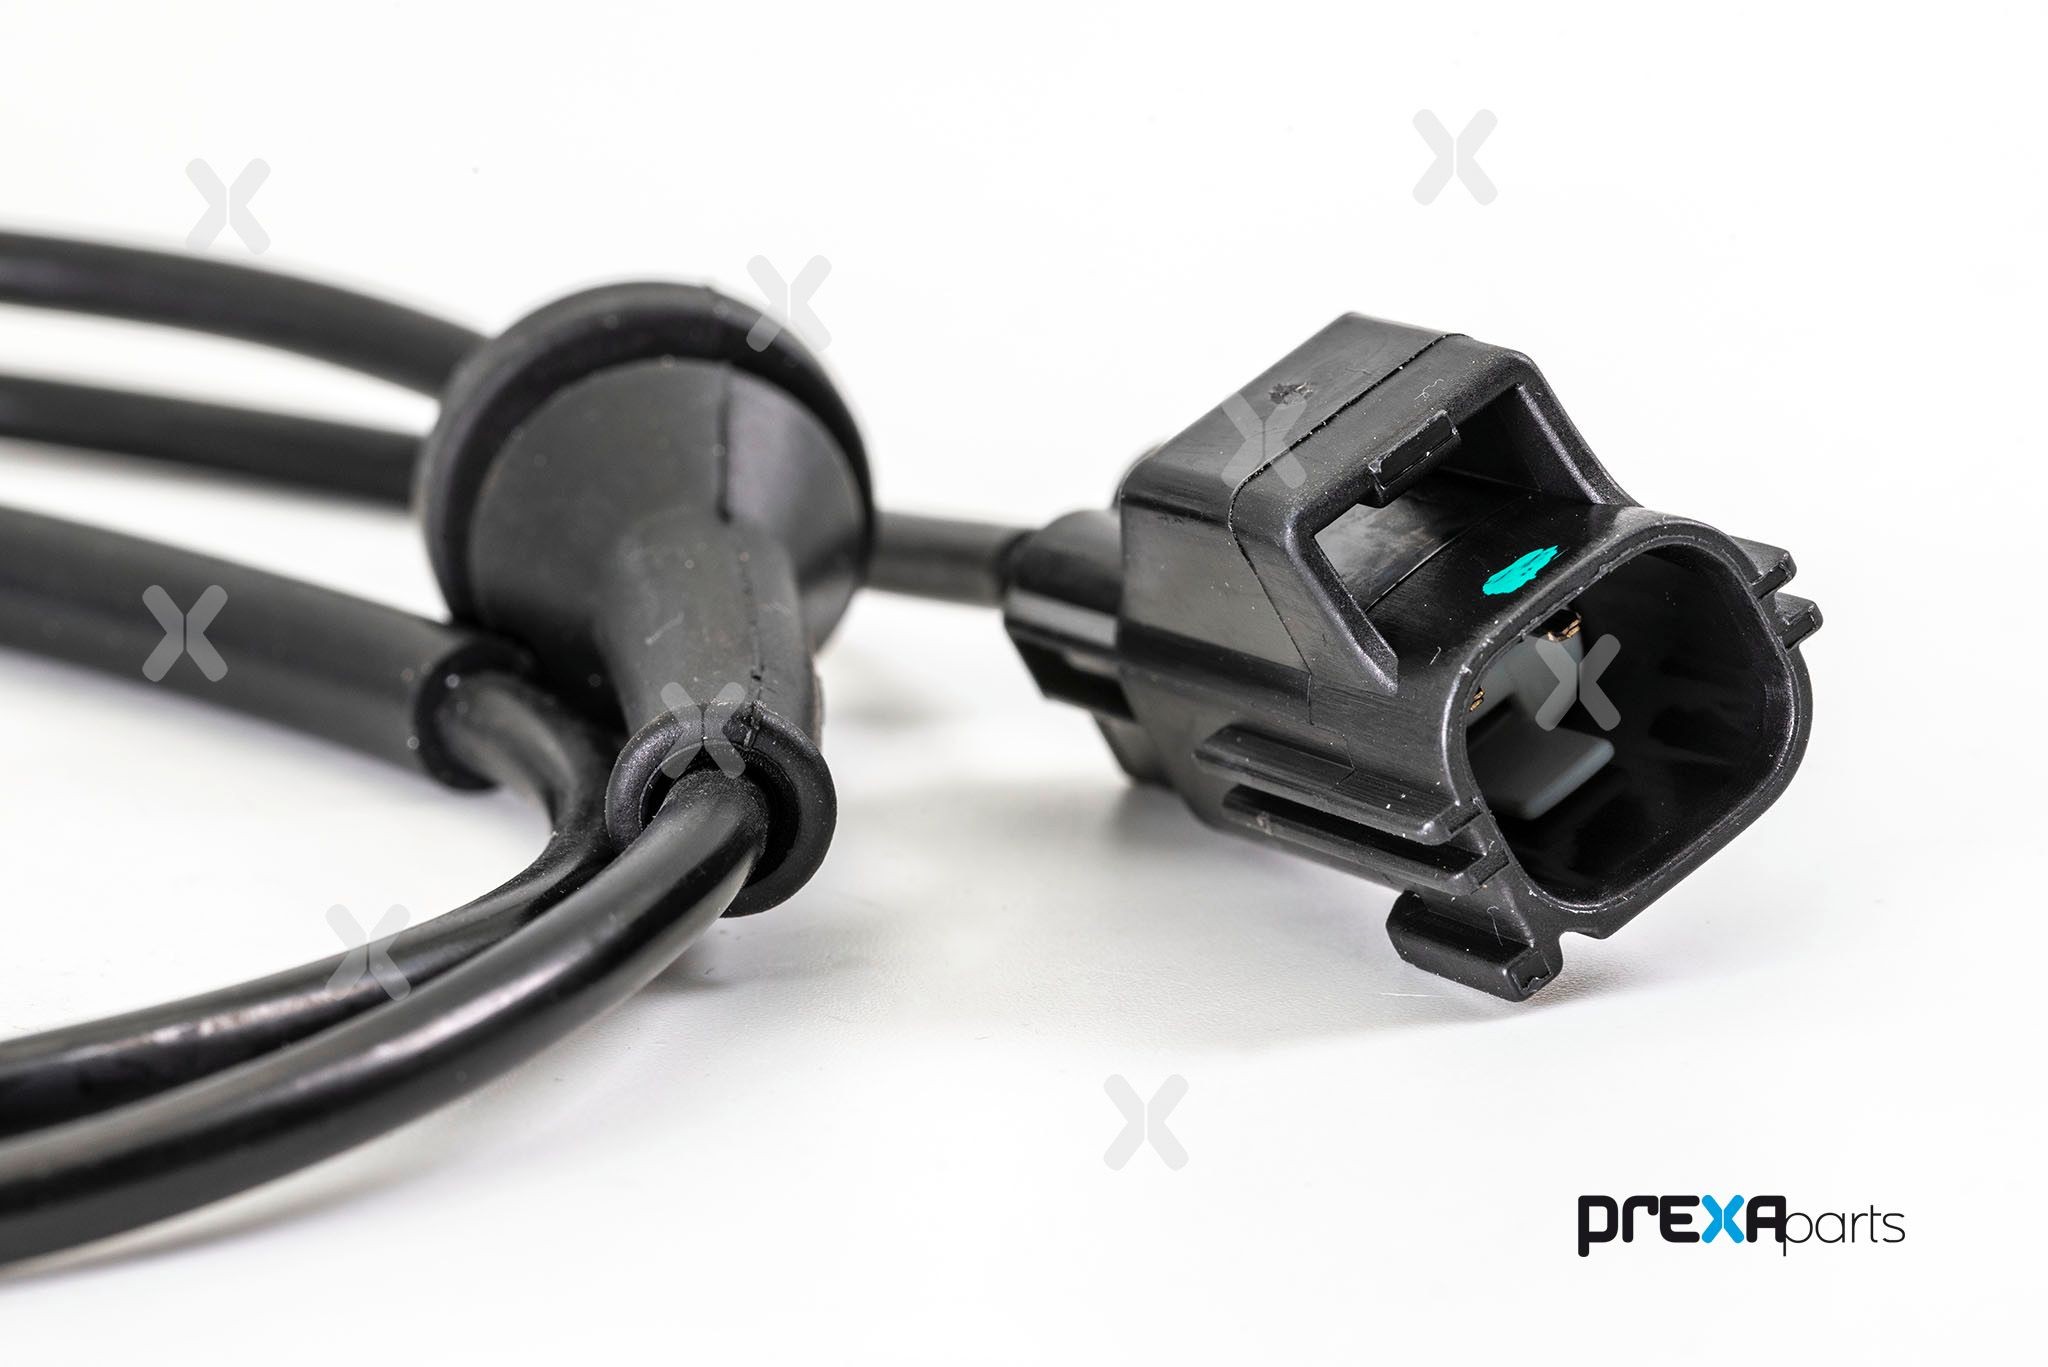 P601005 Anti lock brake sensor PREXAparts P601005 review and test